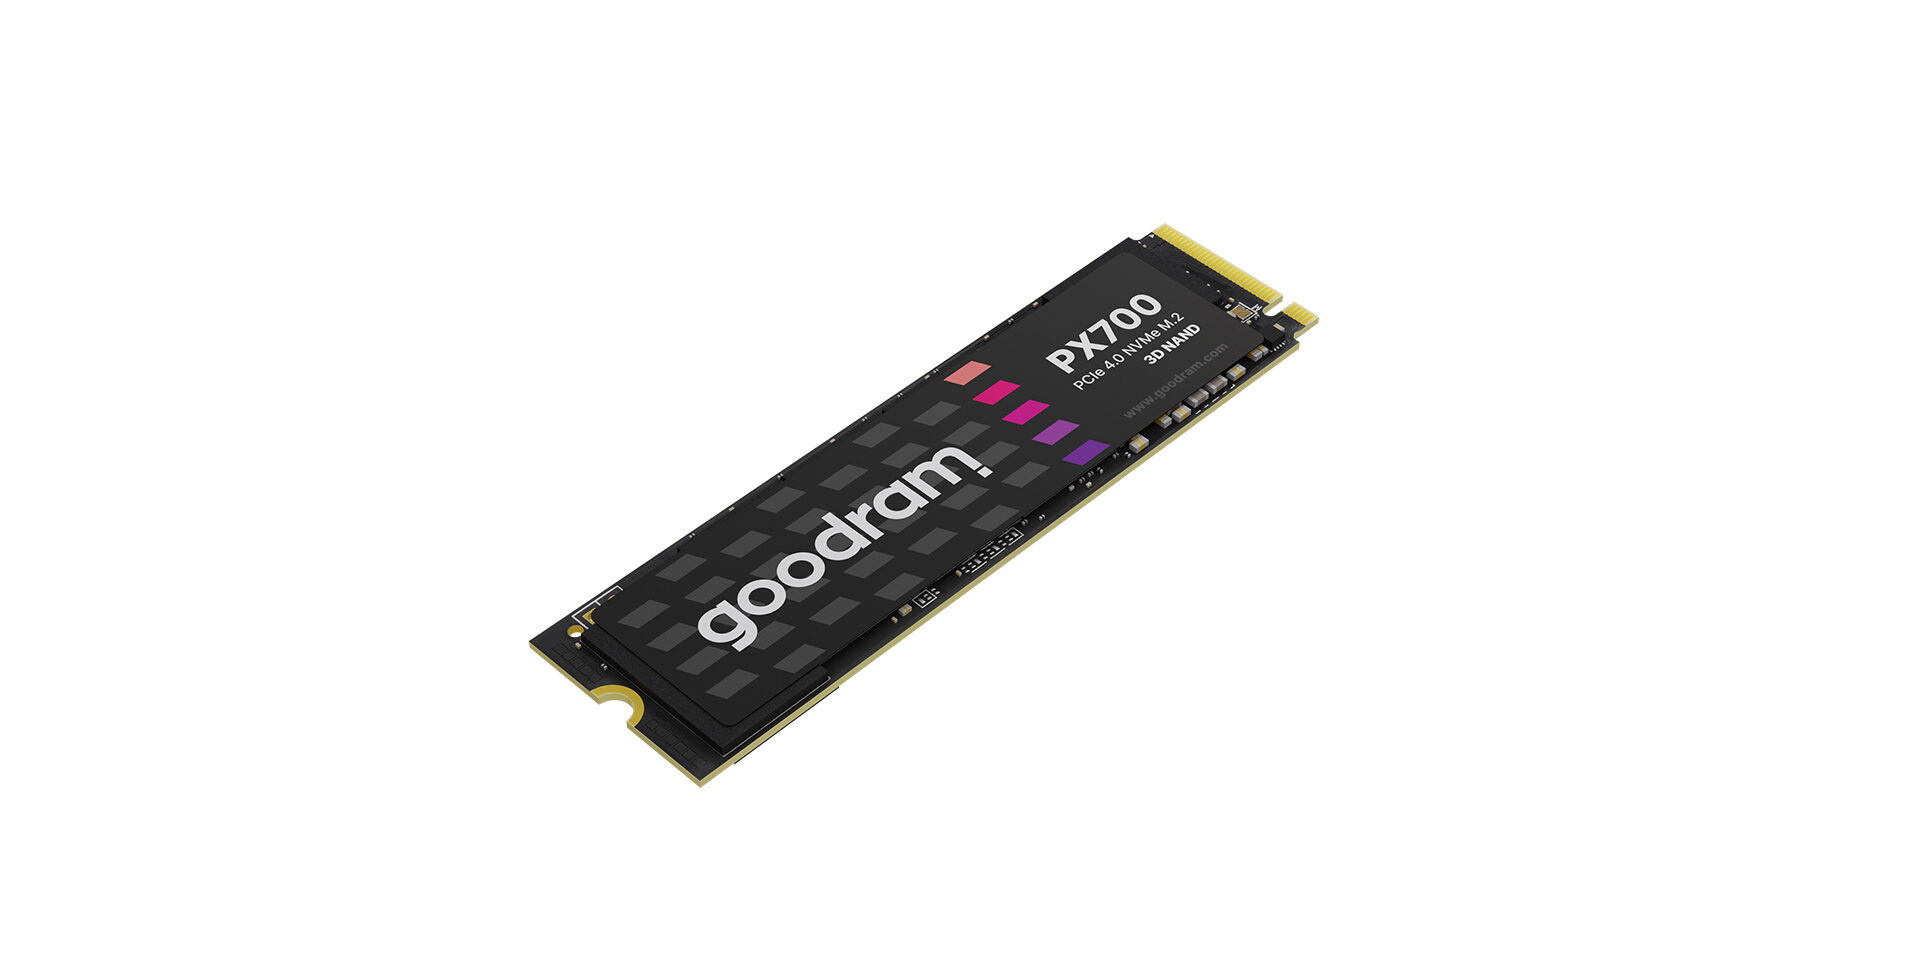 dysk SSD PX700 marki Goodram